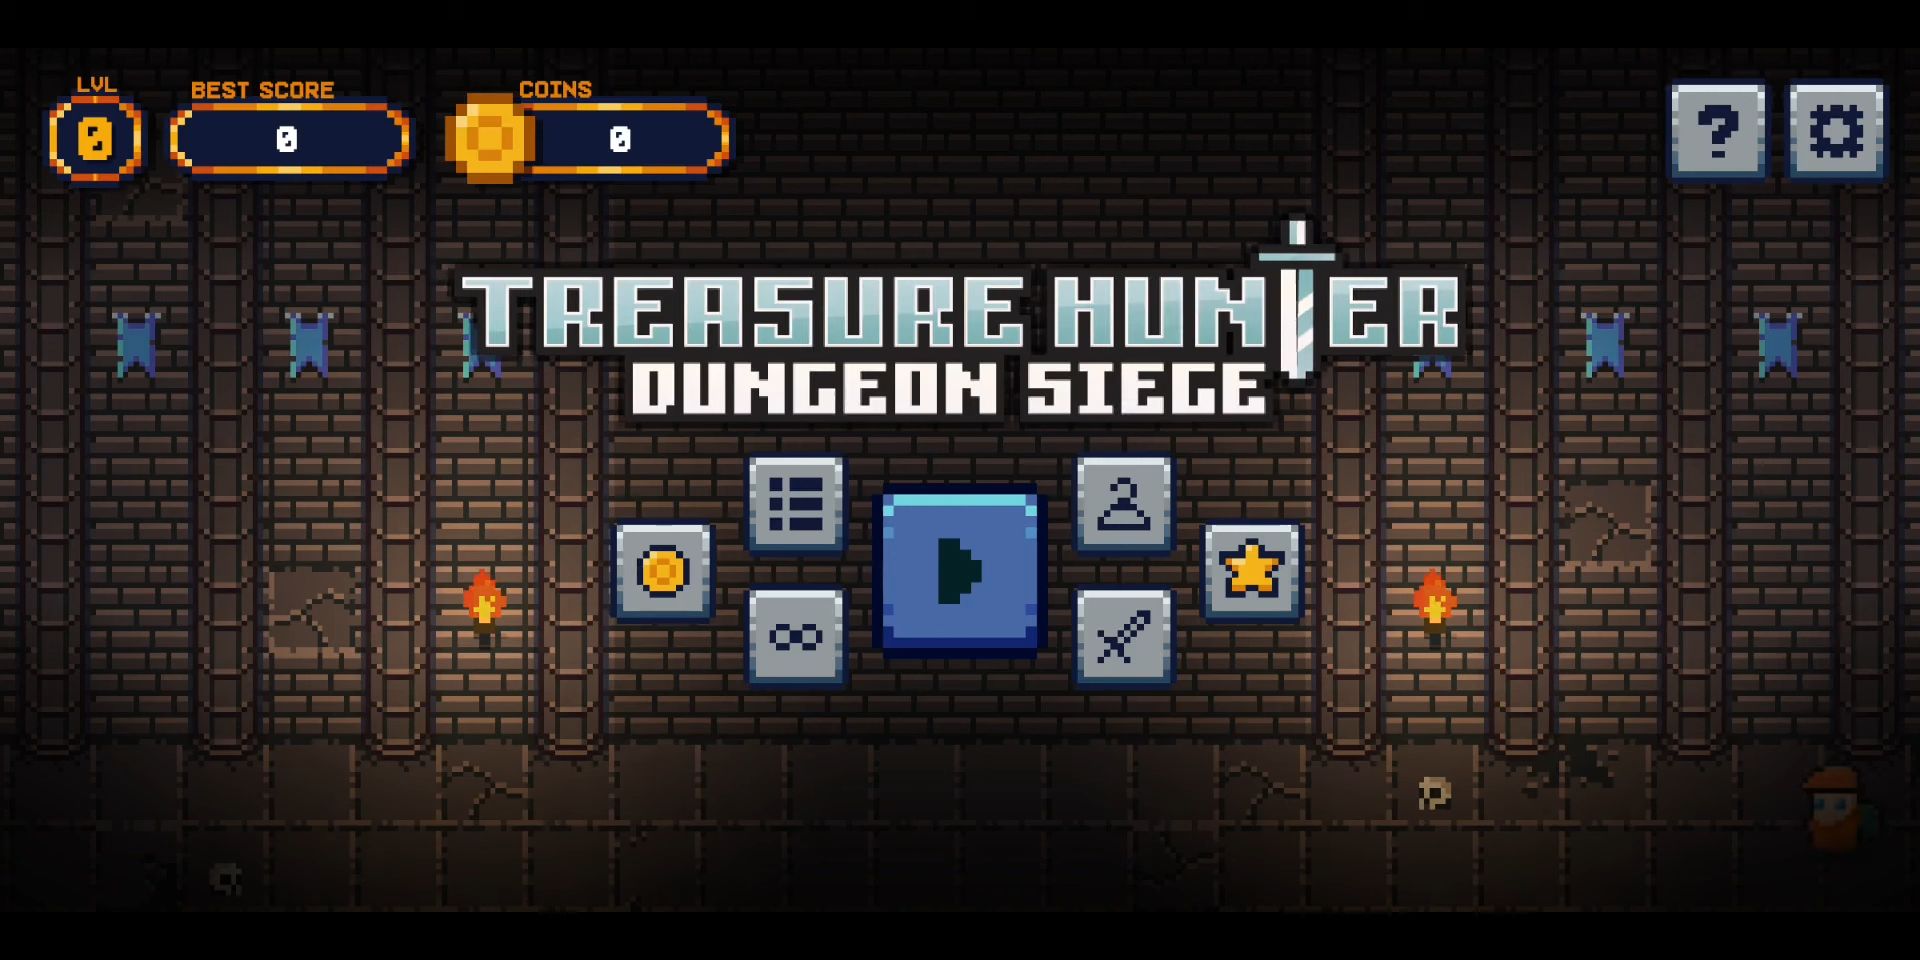 Scarica Treasure Hunter: Dungeon Siege gratis per Android.